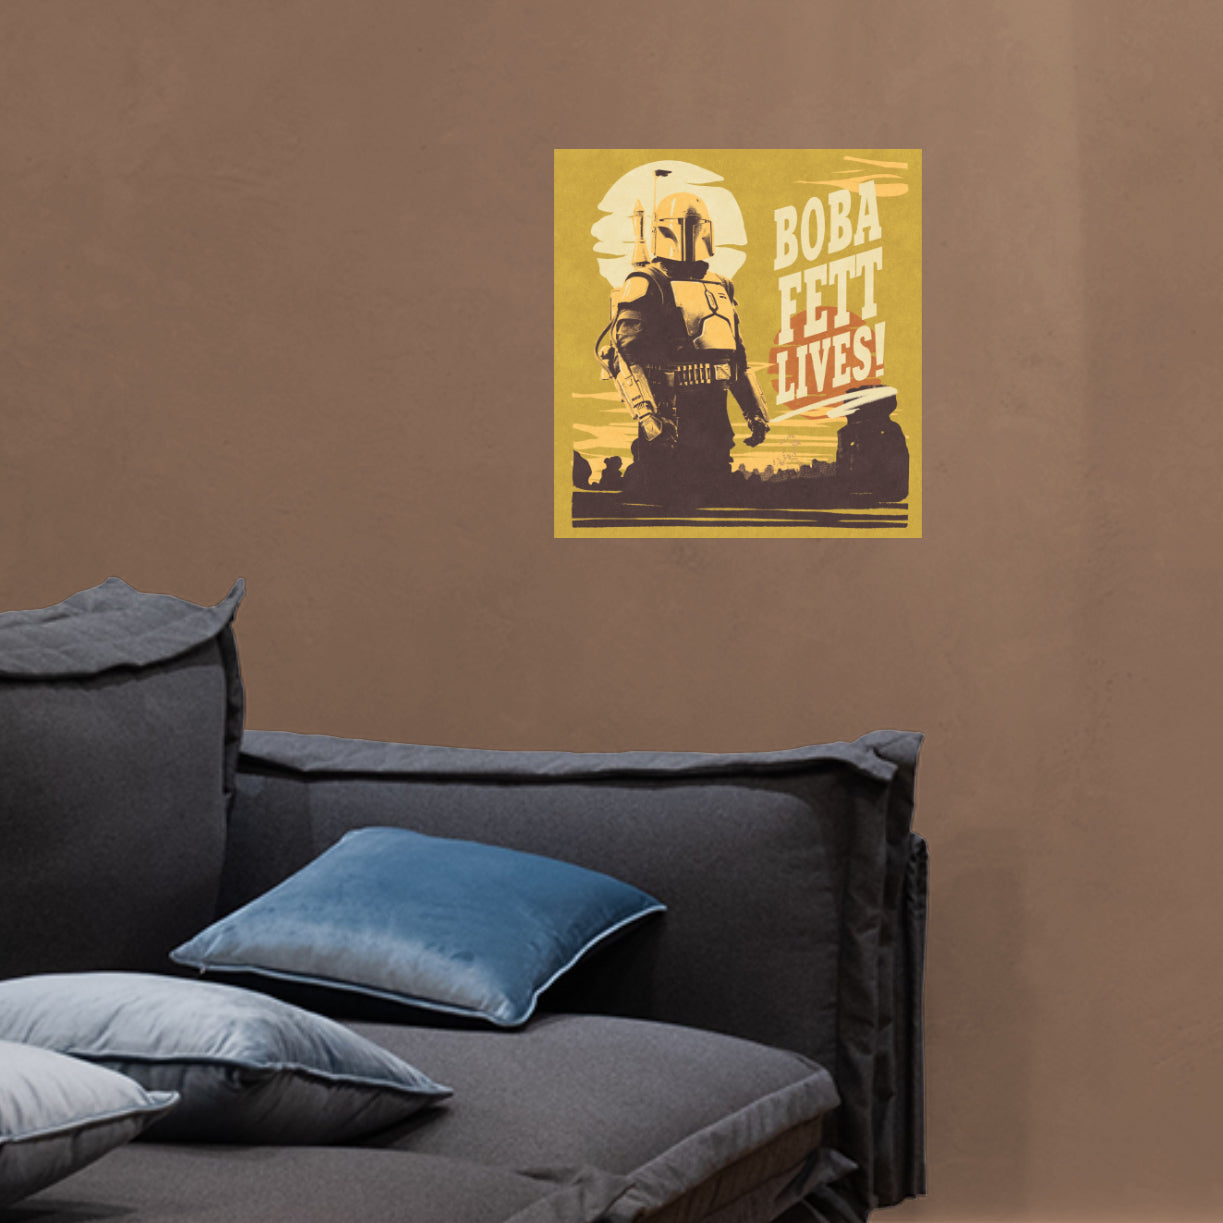 Book of Boba Fett: Boba Fett Boba Fett Lives Poster - Officially Licensed Star Wars Removable Adhesive Decal